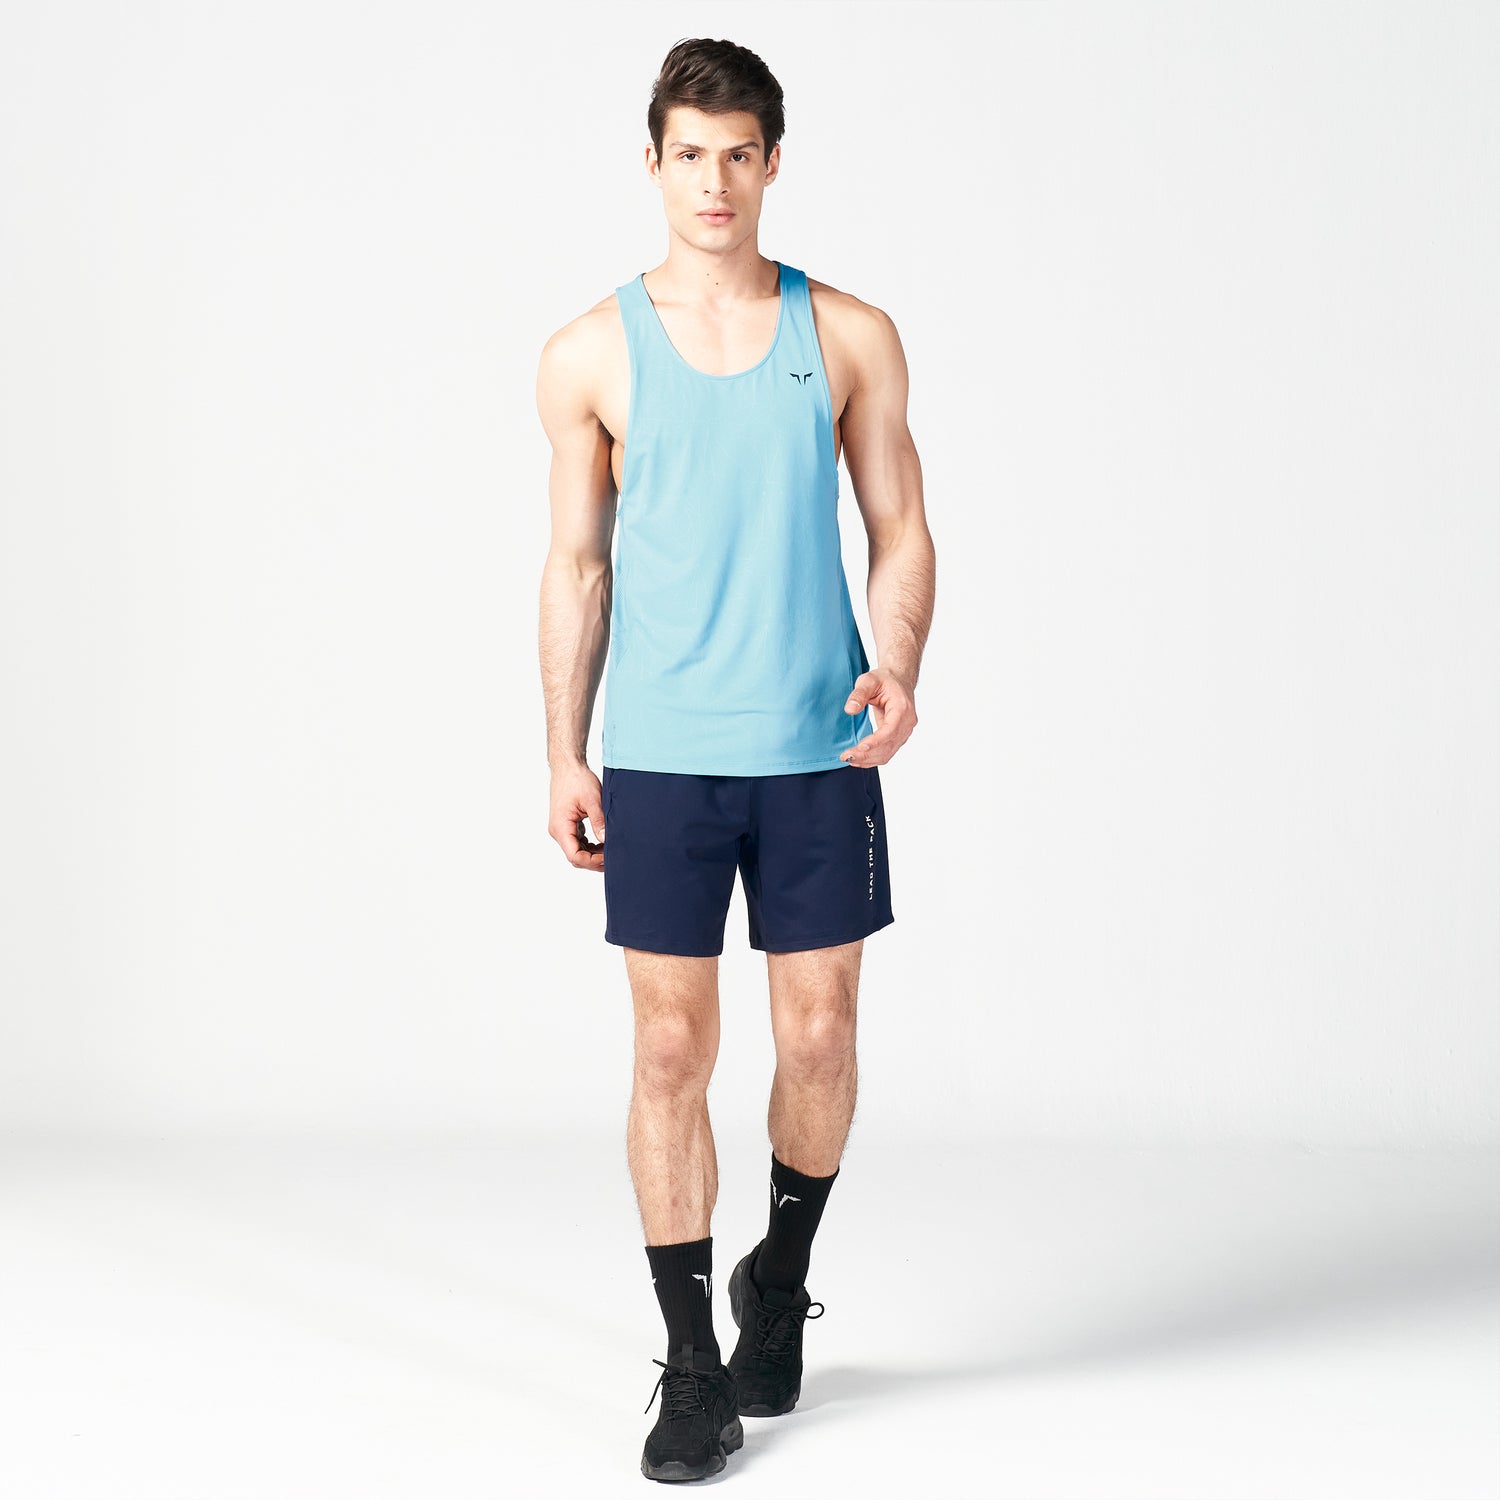 squatwolf-gym-wear-core-aerotech-tank-blue-stringer-vests-for-men